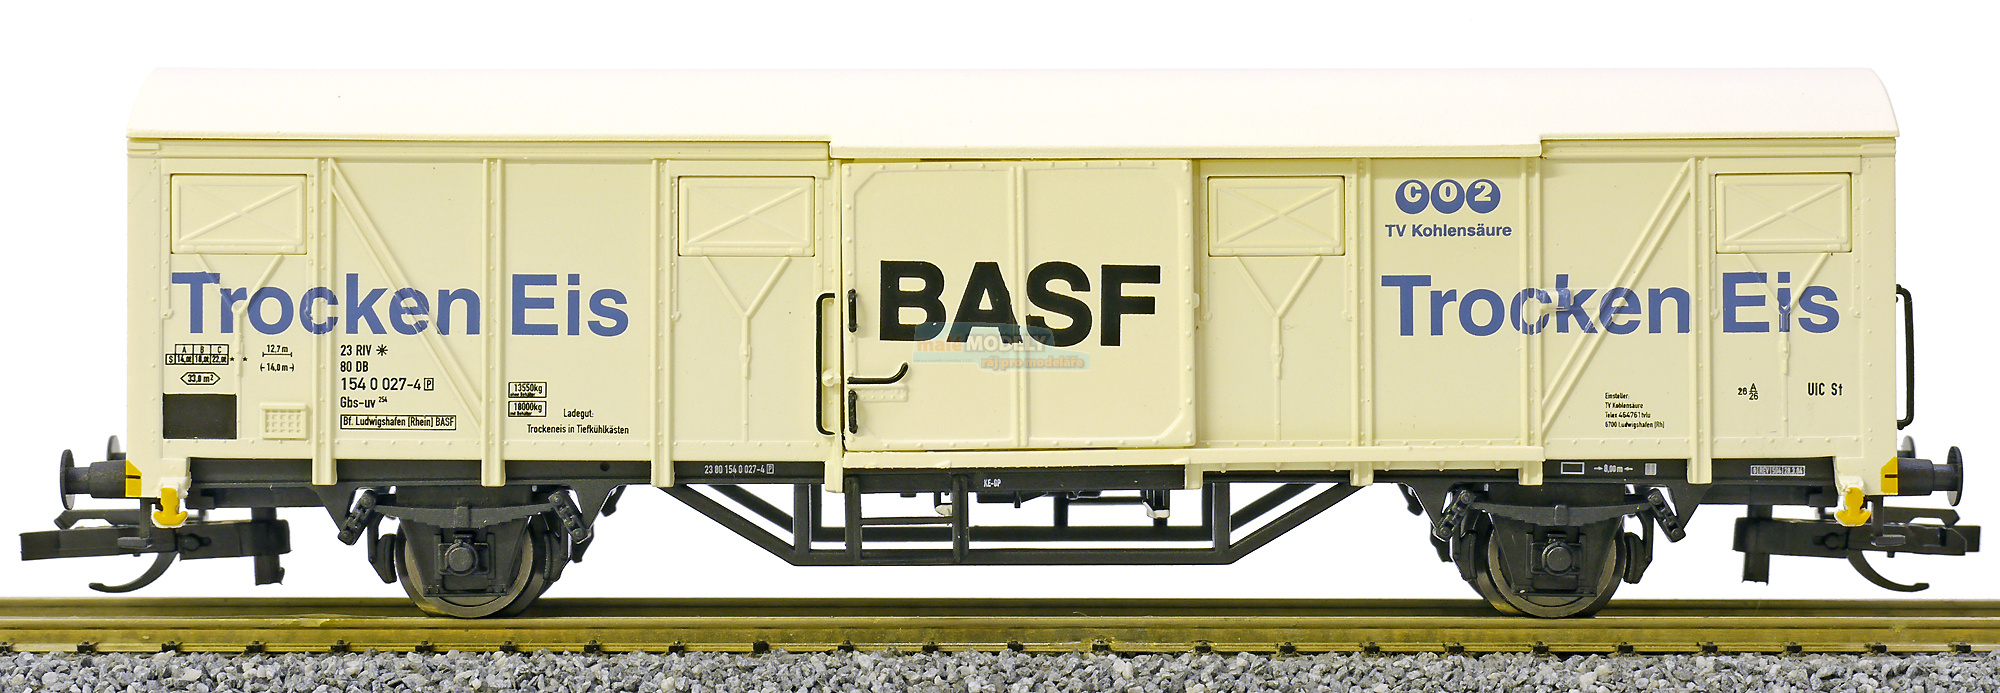 Nákladní vůz Gbs-uv 254 <b>BASF Trockeneis</b> - (31.03.2014), DB, IV